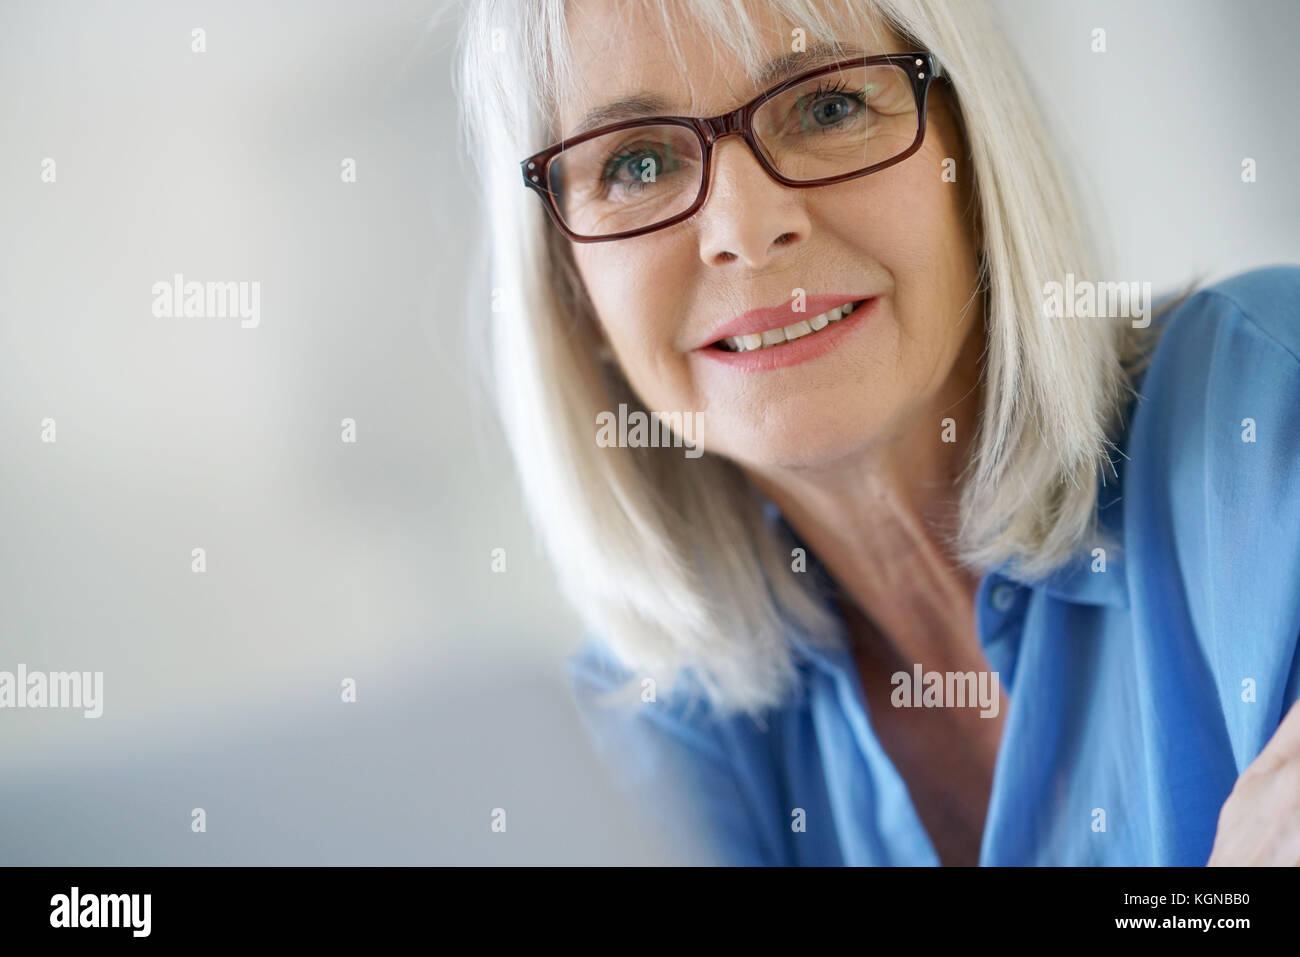 Portrait of senior businesswoman wearing eyeglasses Stock Photo